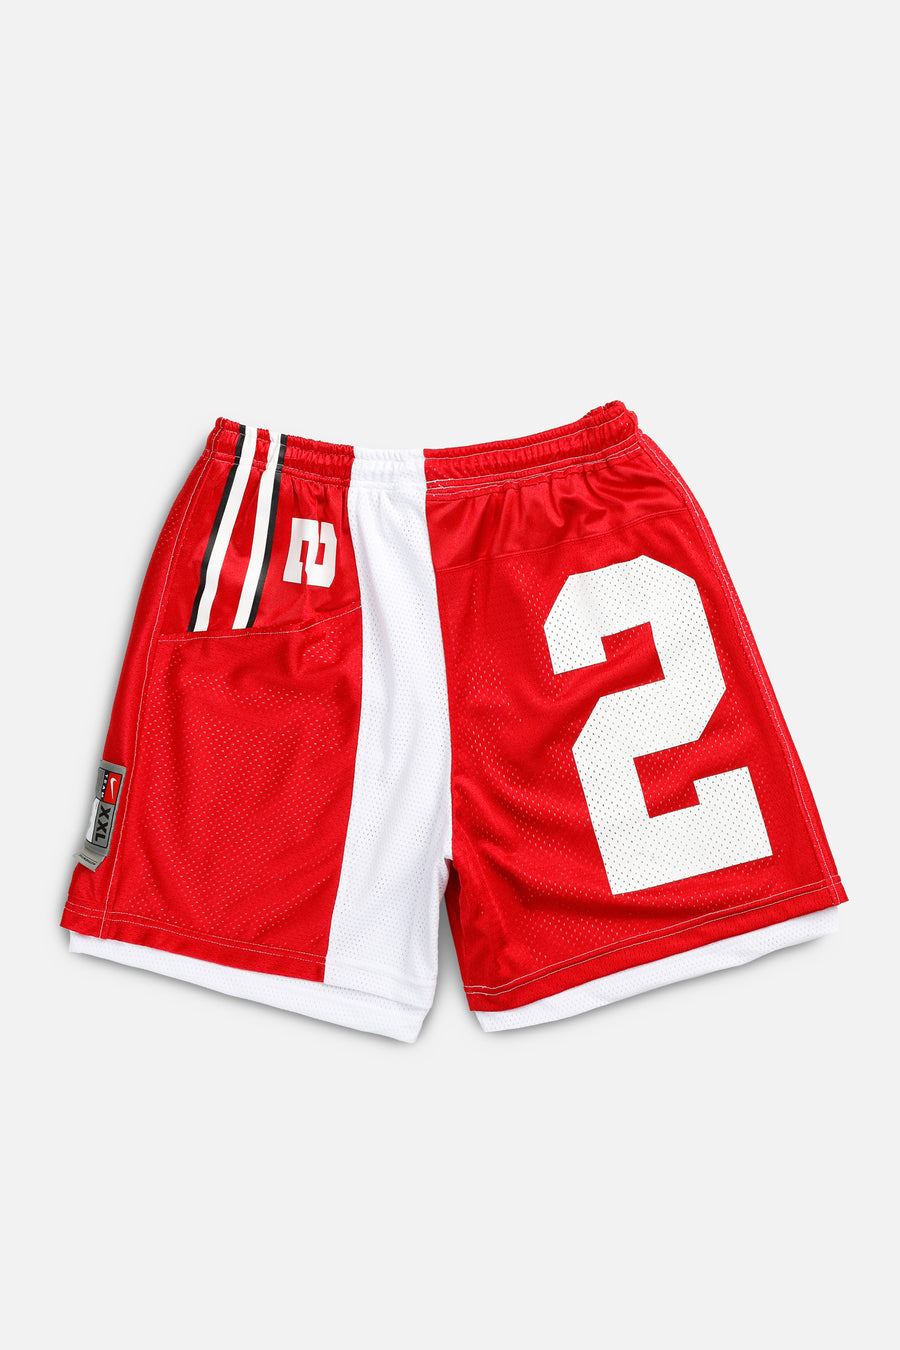 Unisex Rework Ohio State Football Jersey Shorts - XL